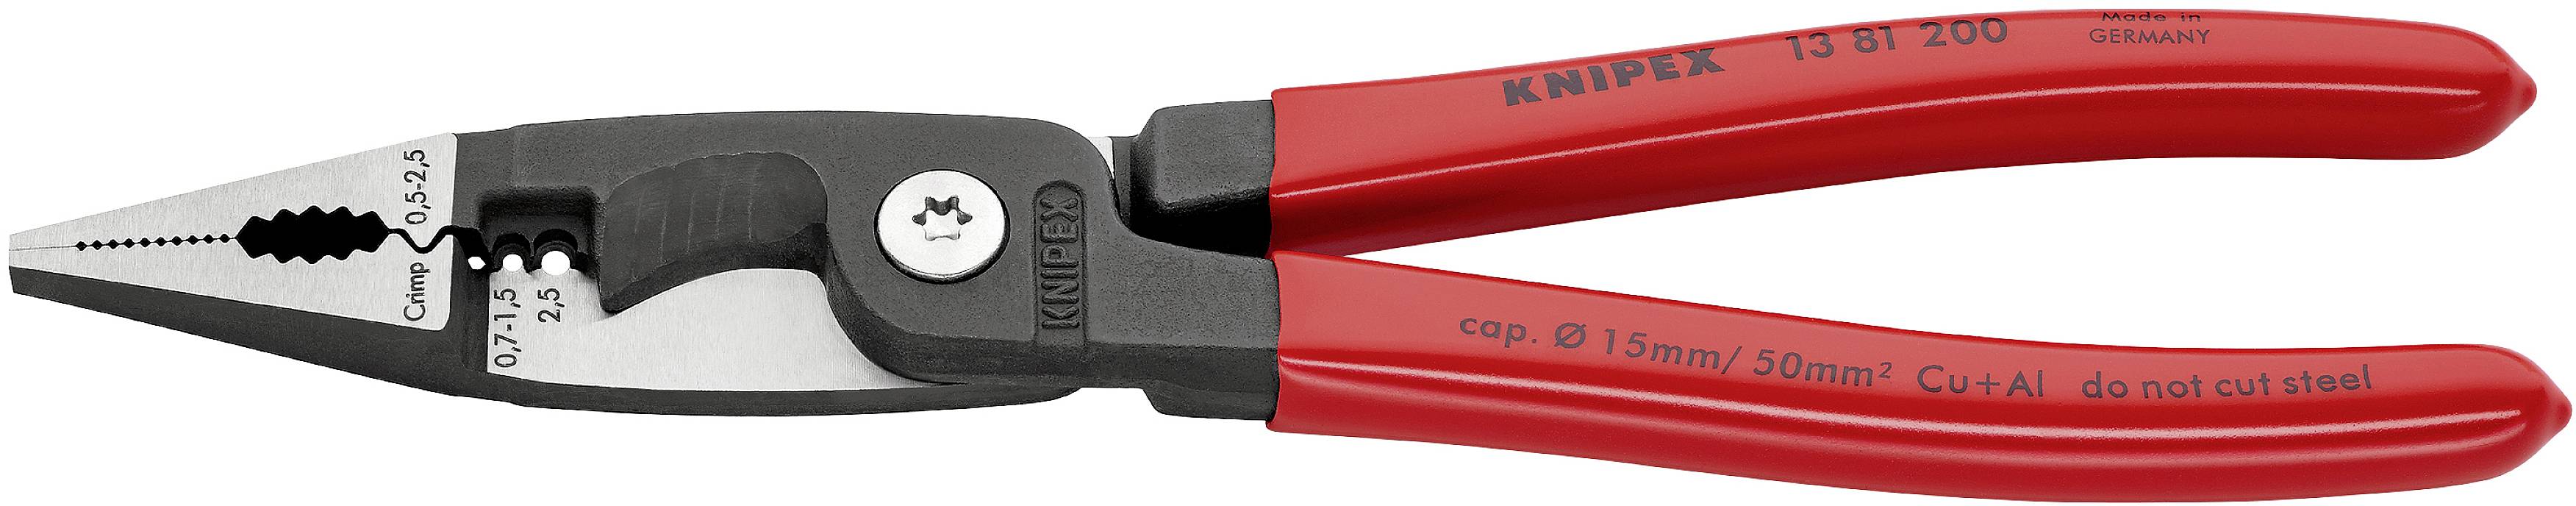 KNIPEX Elektro-Installationszange 13 81 200 (13 81 200)